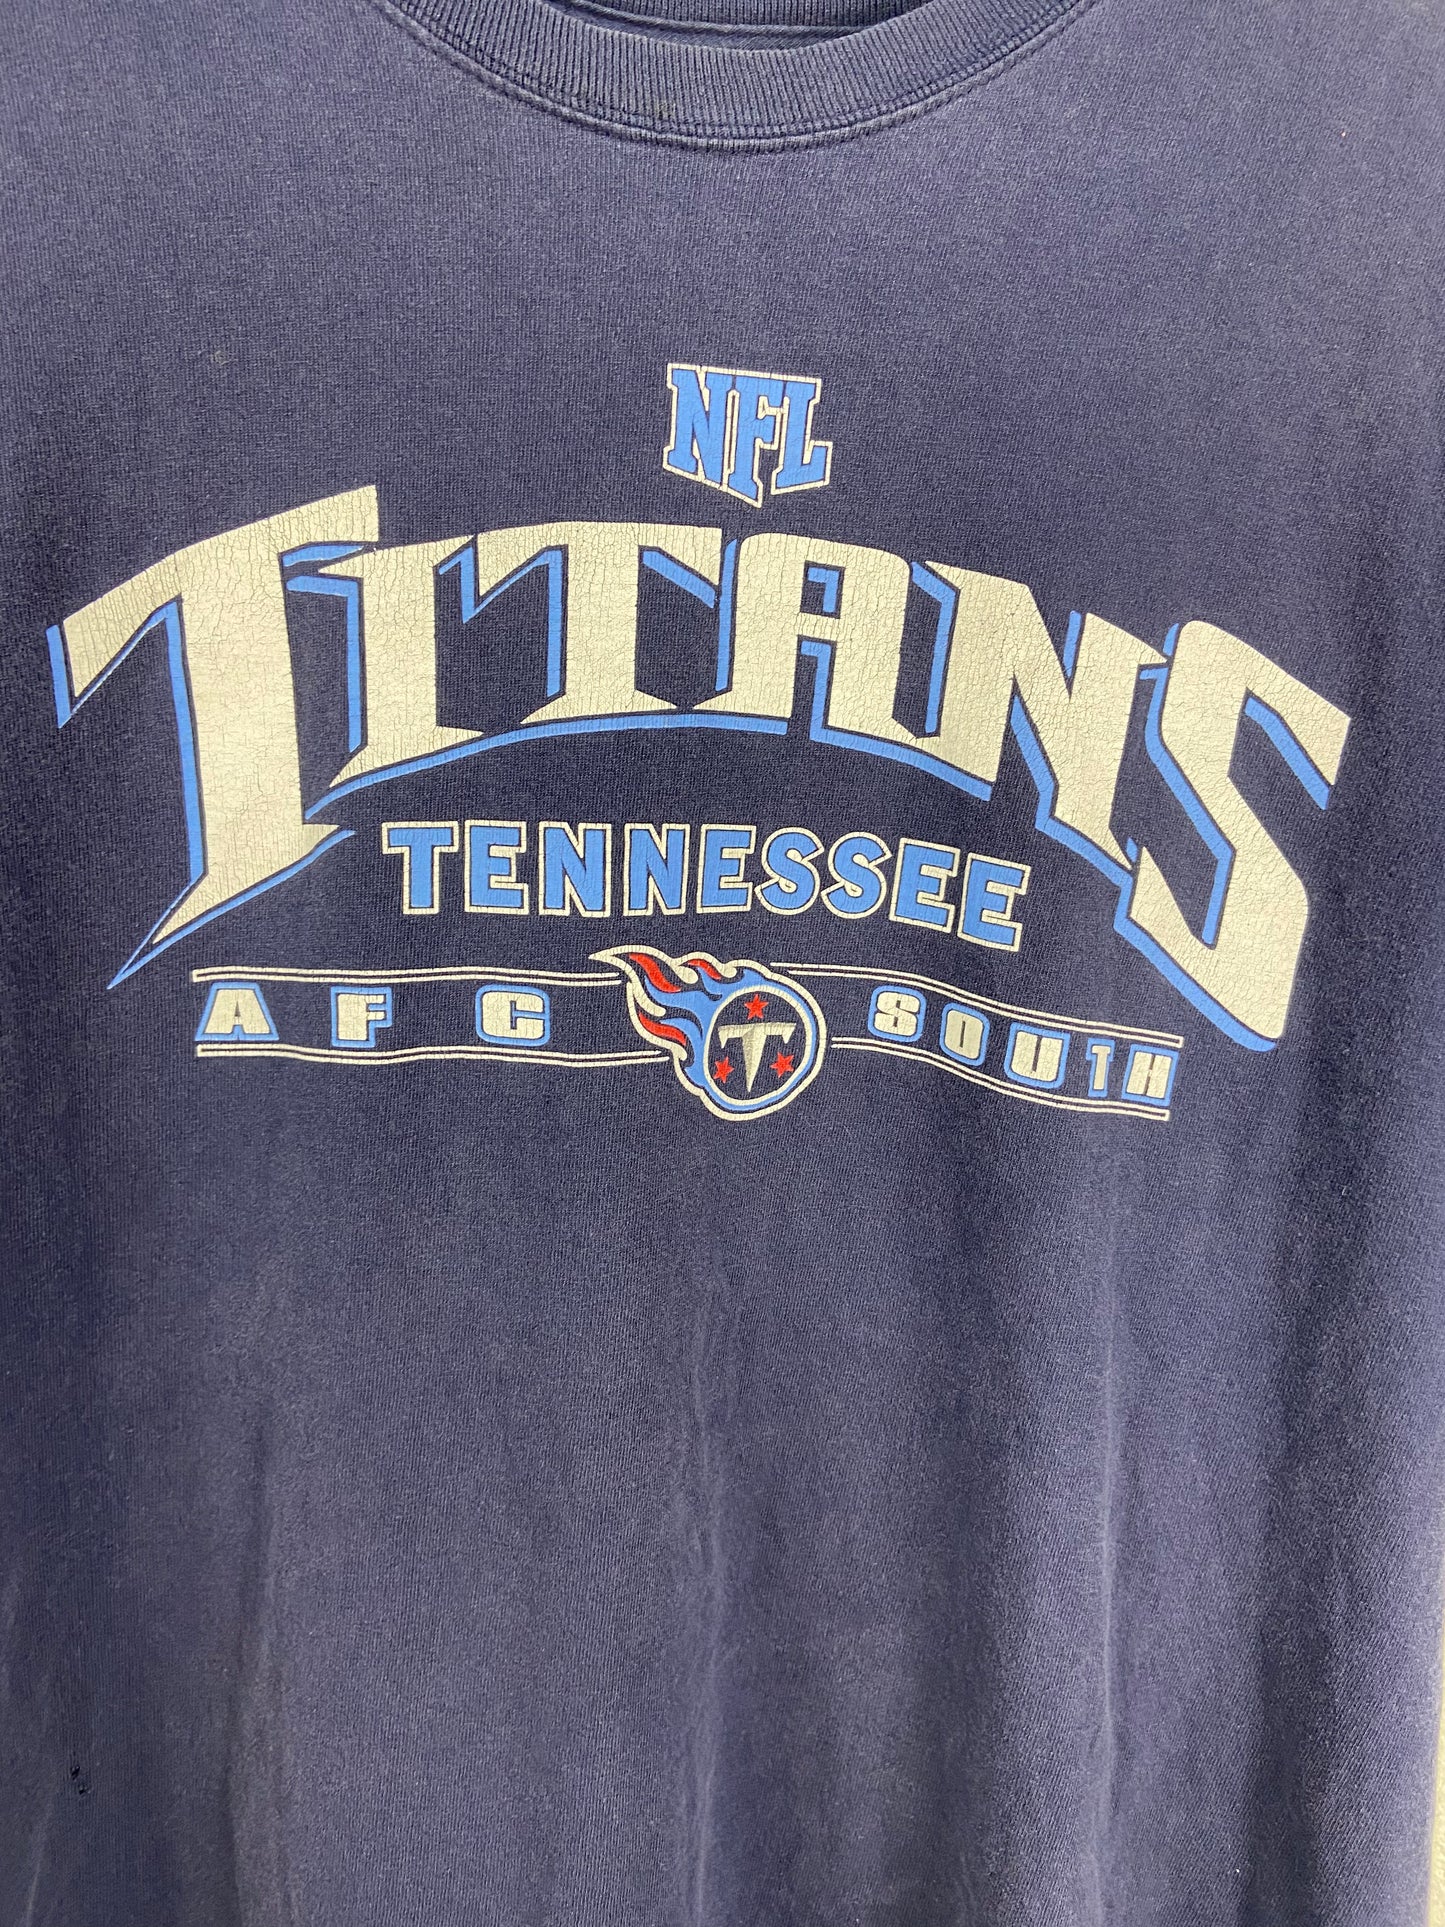 VTG Tennessee Titans AFC South Navy Tee Sz L/XL